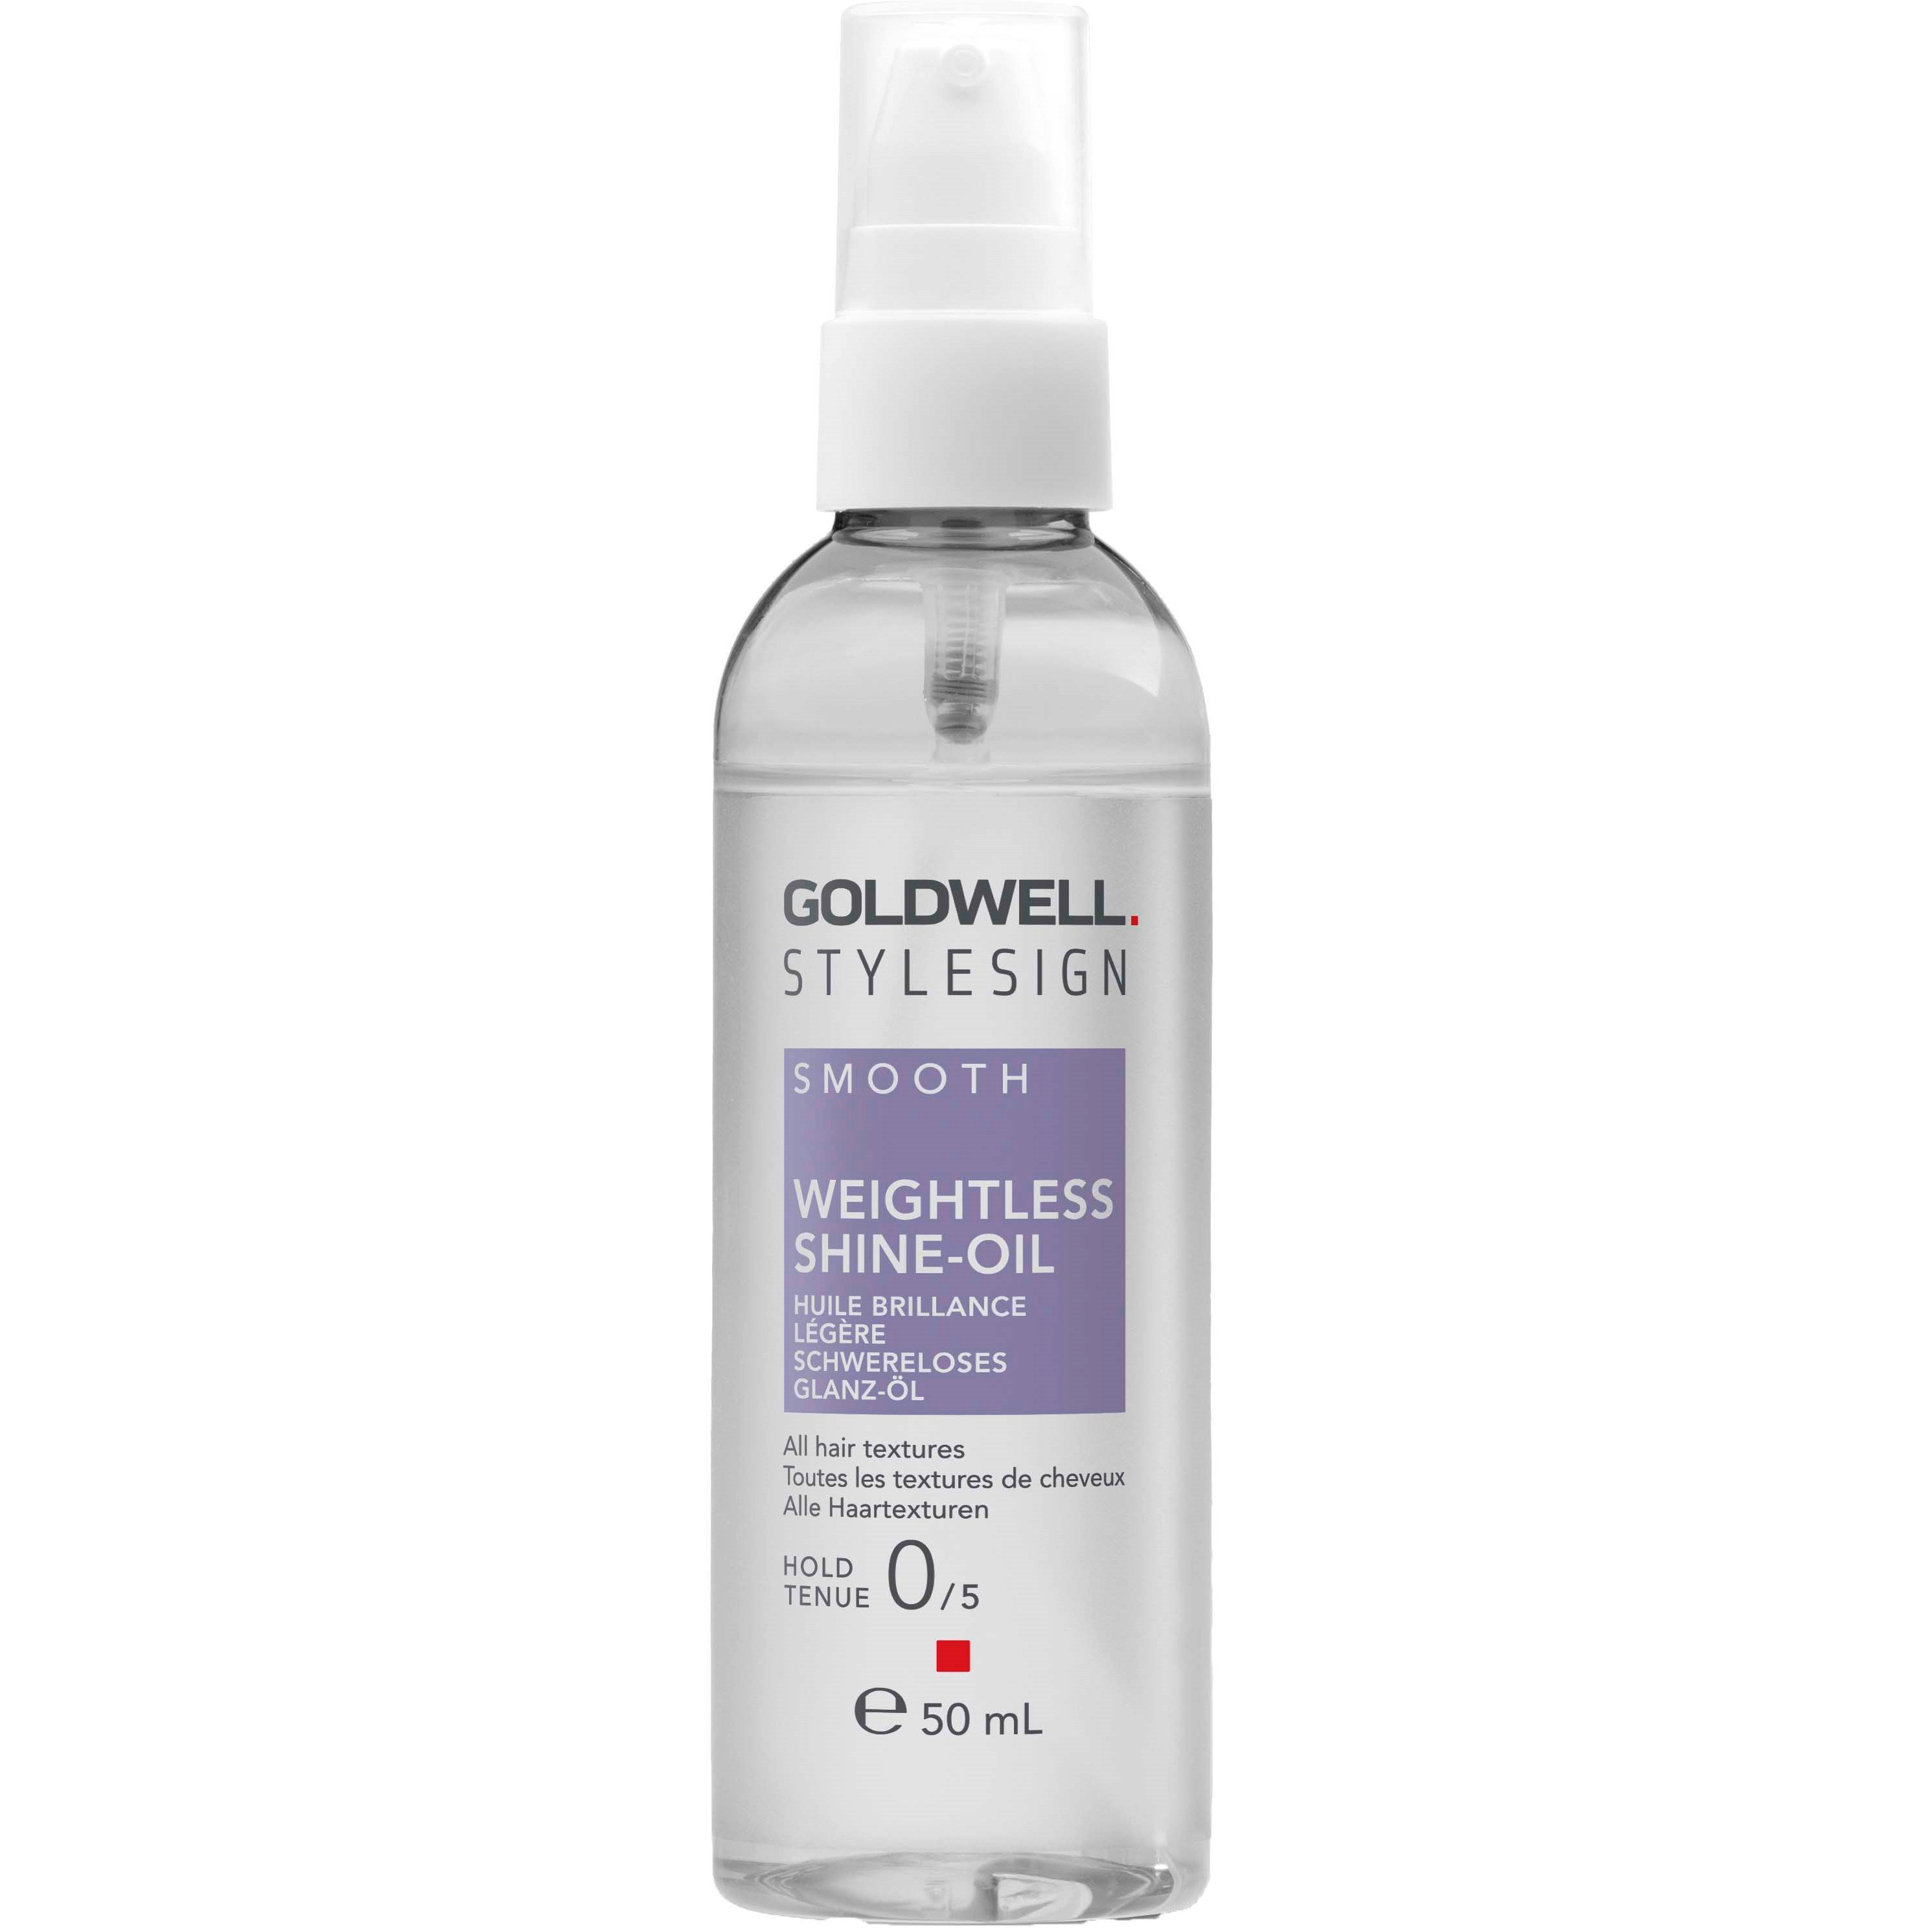 Goldwell StyleSign Smooth Weightless Shine-Oil 50 ml